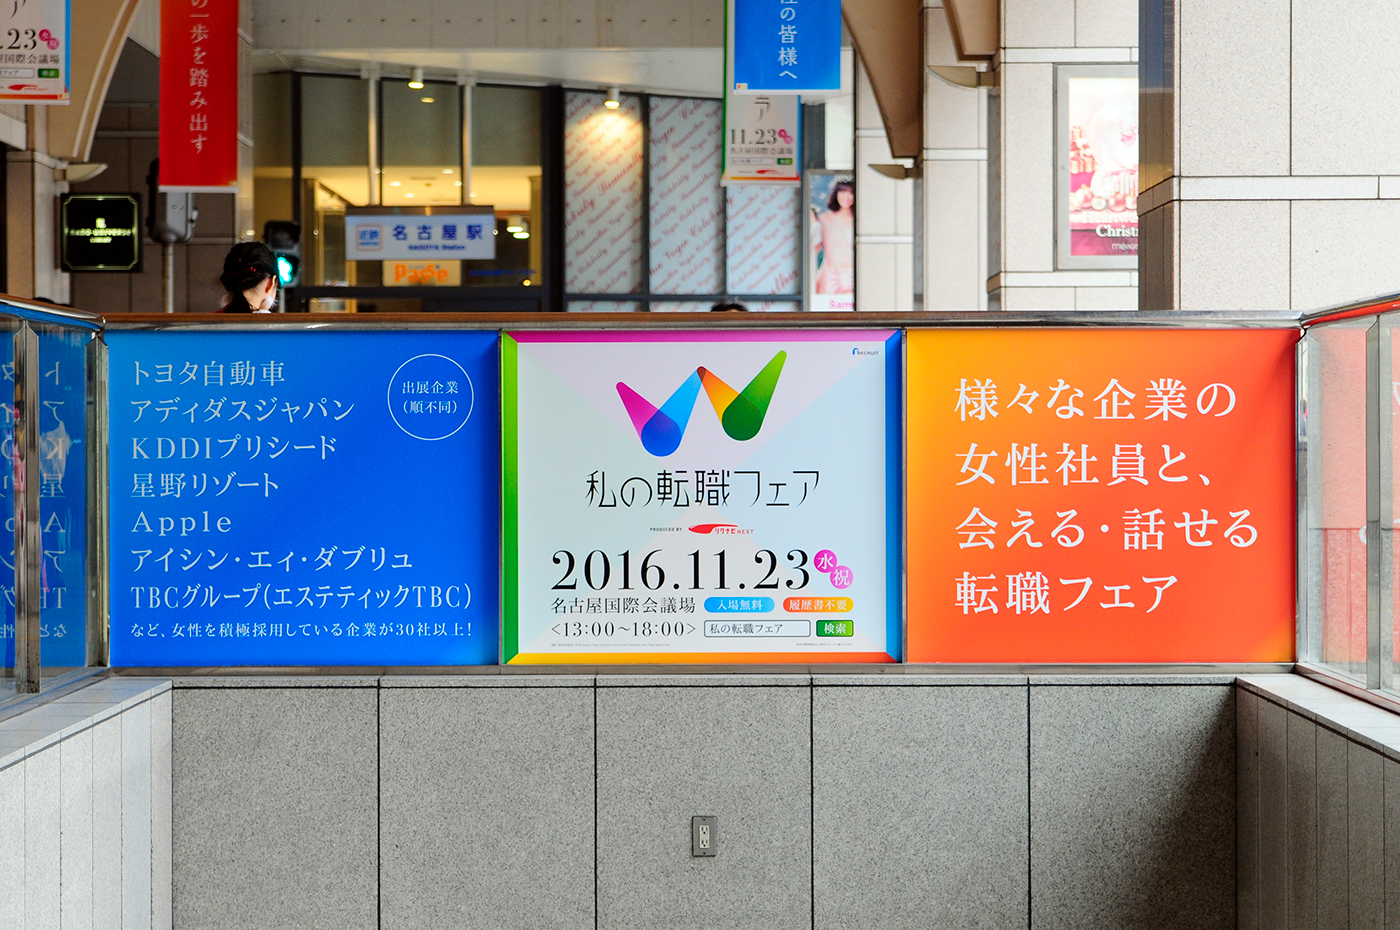 logo logomark Logotype kanji poster advertisement Event colorful CI VI